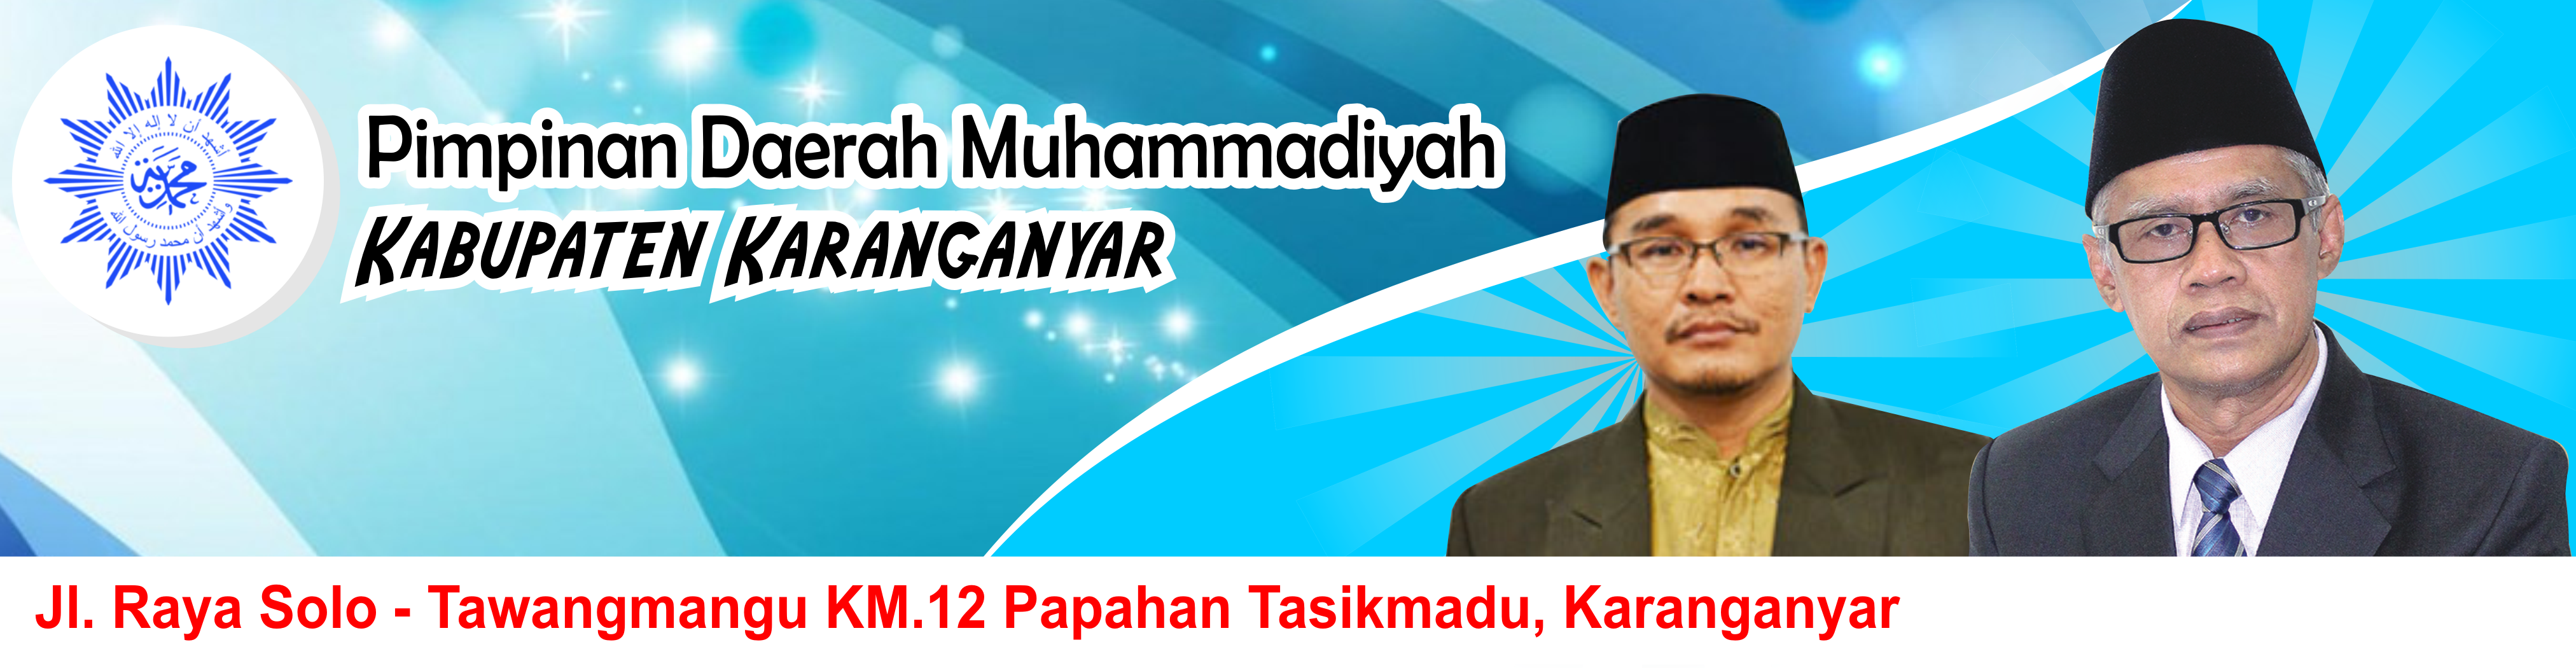 Lembaga Hubungan dan Kerjasama International Pimpinan Daerah Muhammadiyah Kabupaten Karanganyar